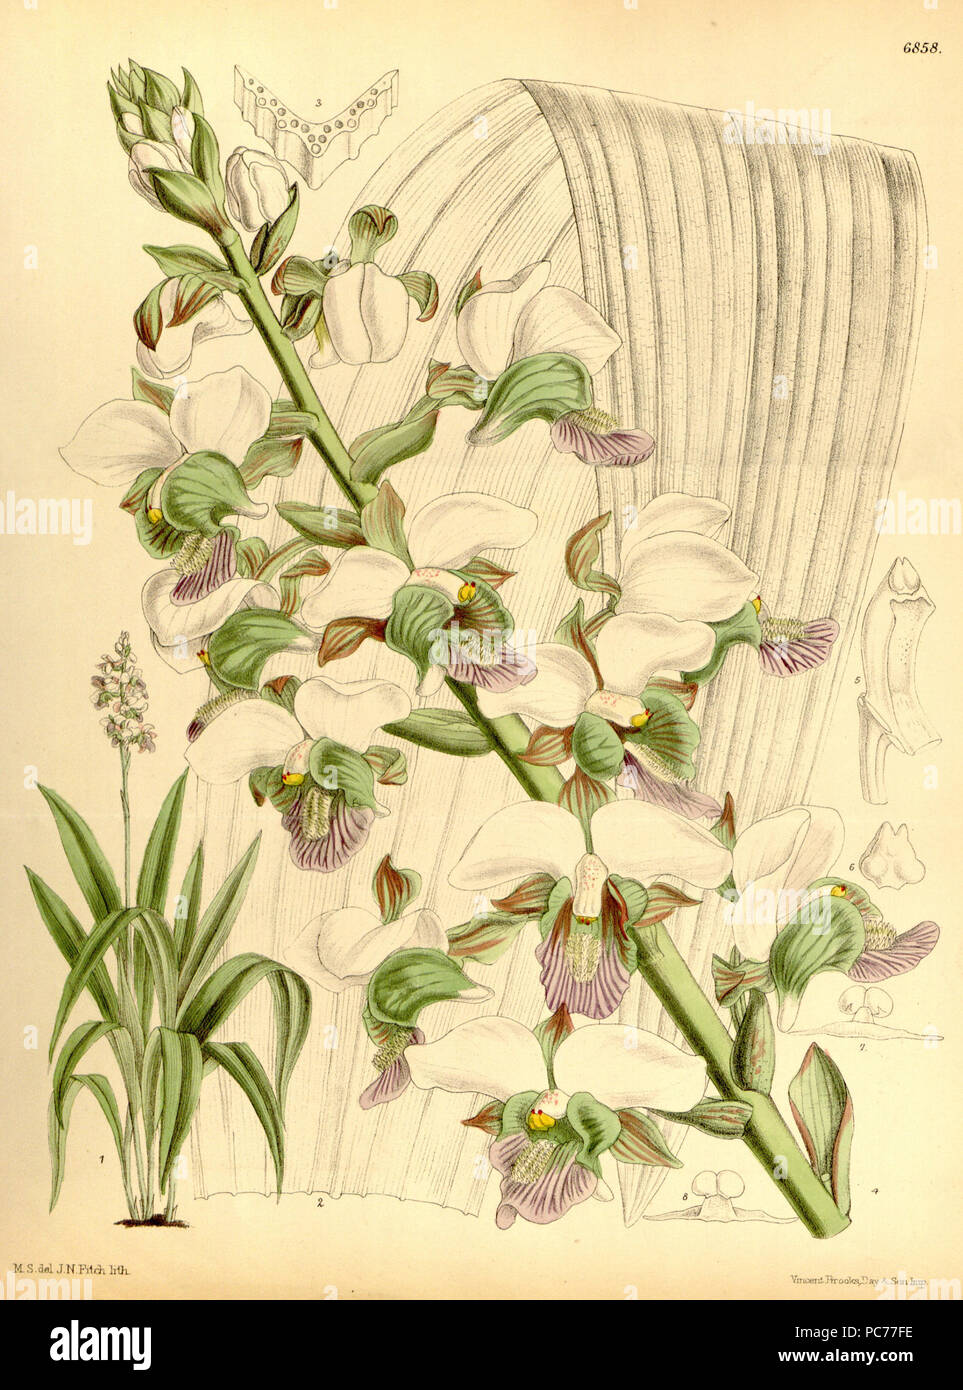 198 Eulophia rosea (as Lissochilus sandersonii) - Curtis' 112 (Ser. 3 no. 42) pl. 6858 (1886) Stock Photo